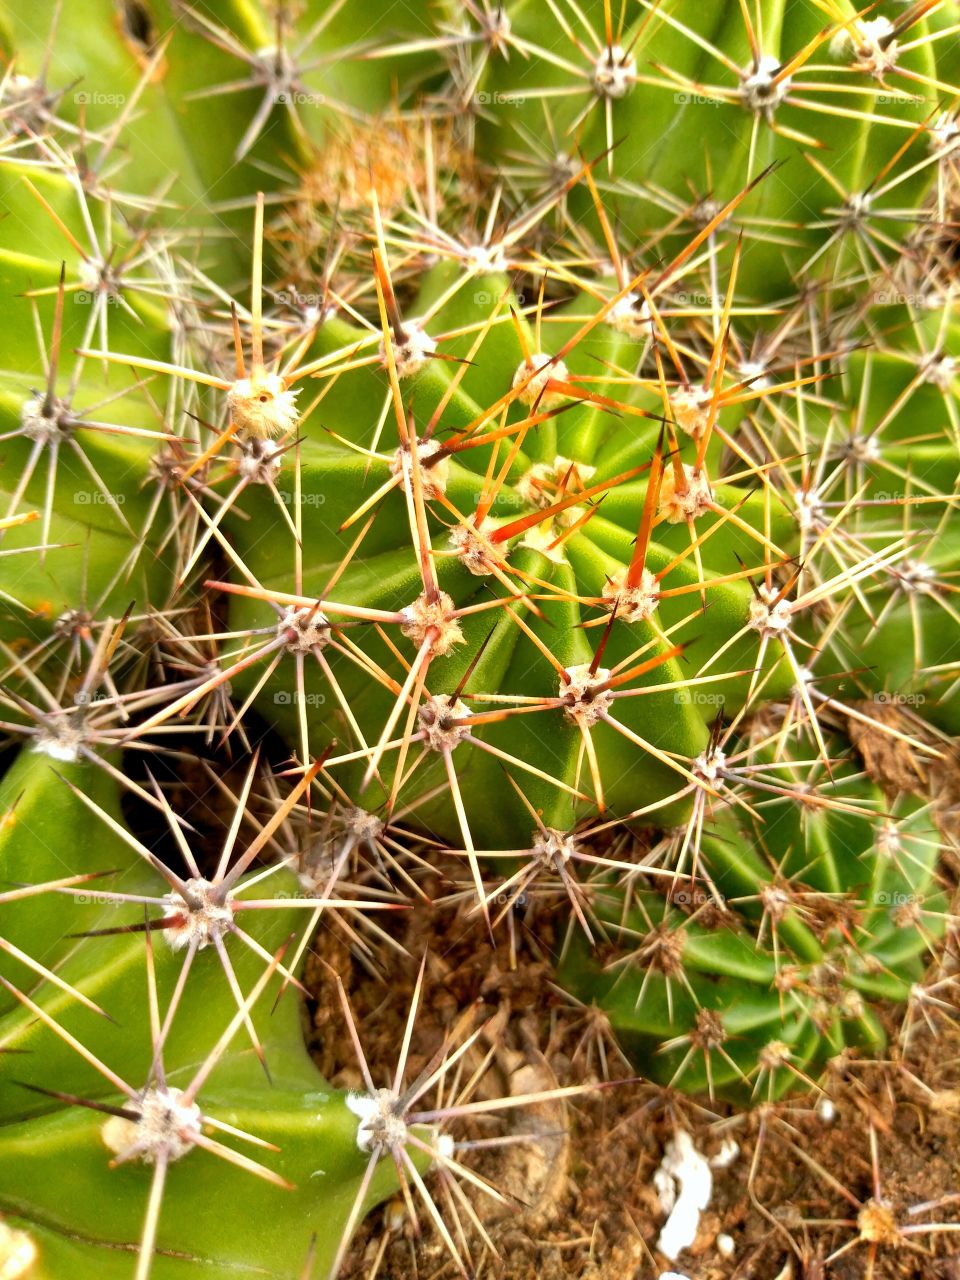 Life is like a cactus, thorny but beautifu.